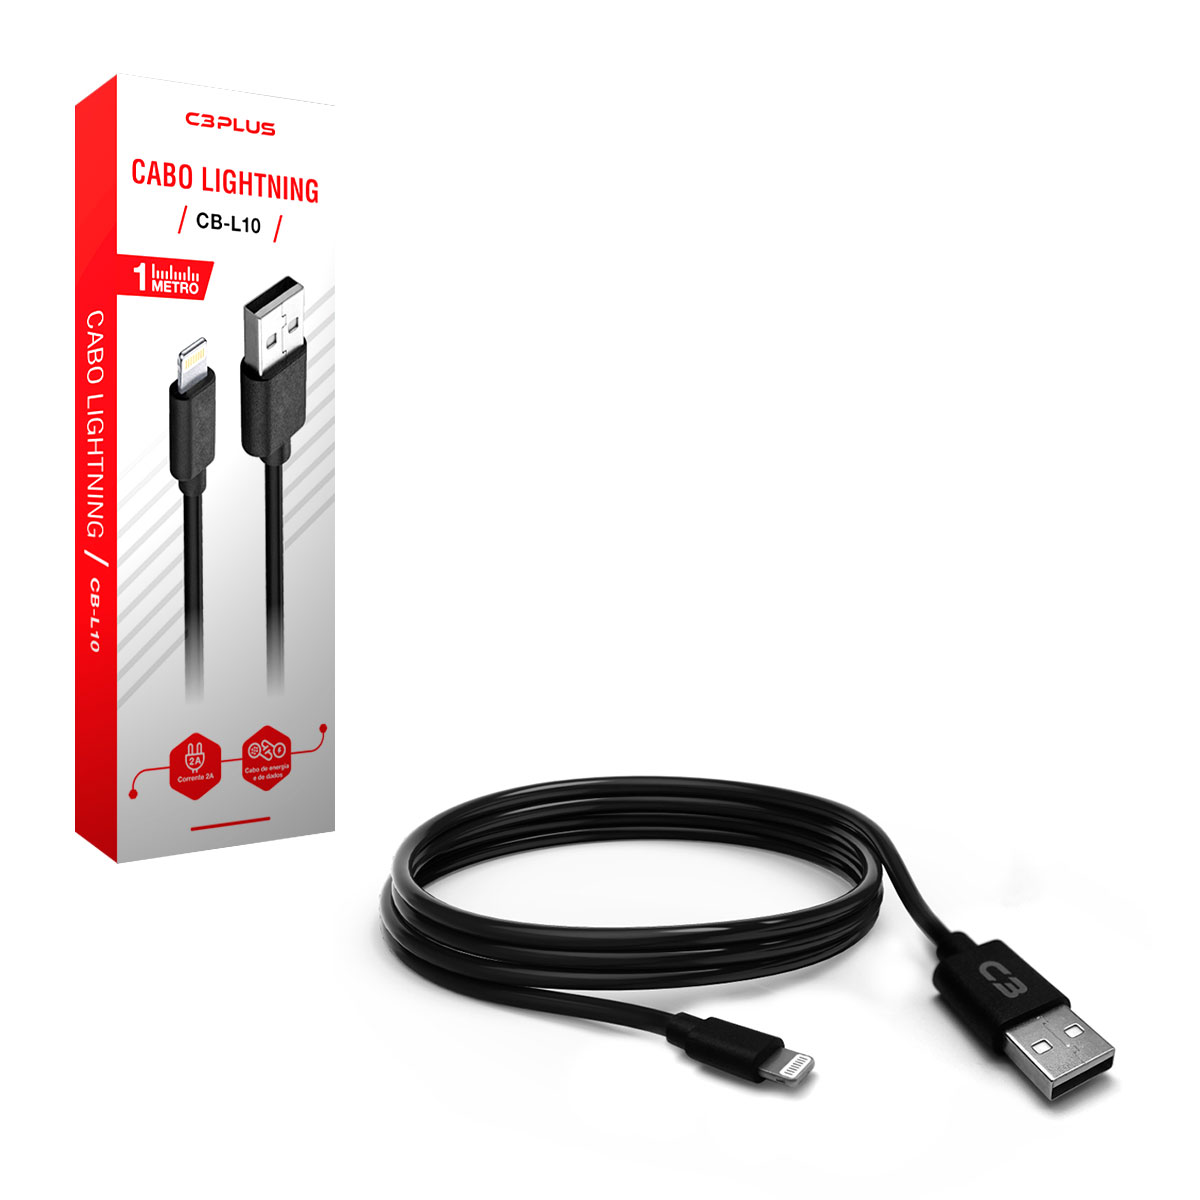 Cabo USB-USB Lightning C3Plus CB-L10BK, Preto, 1m, 2A